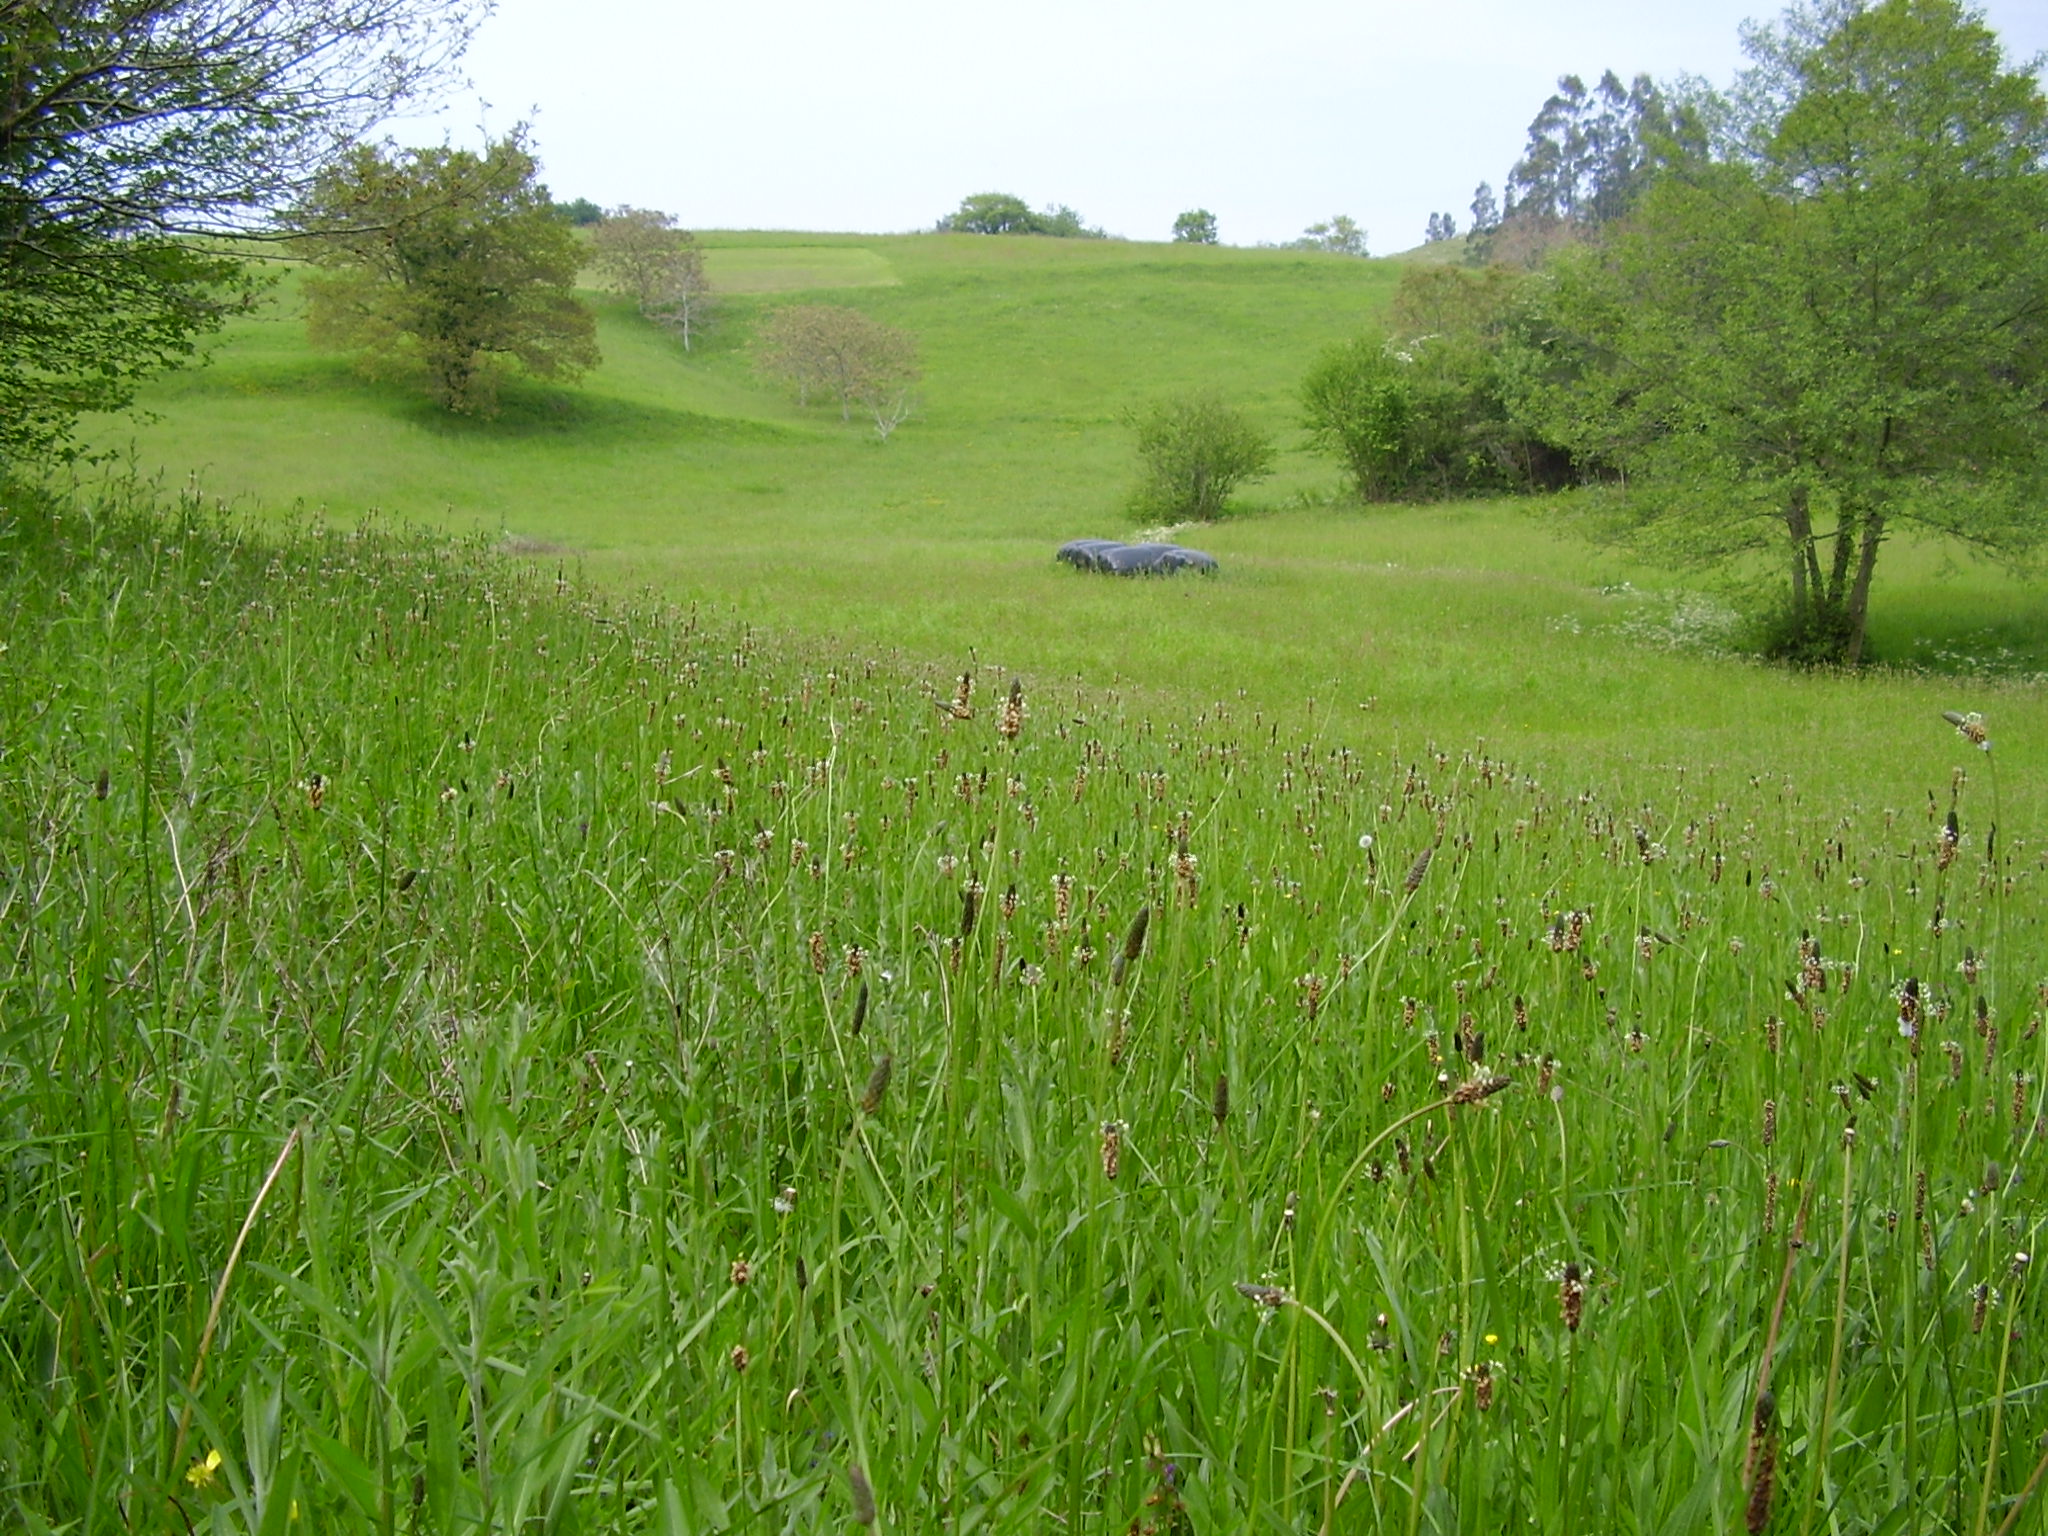 Grassland in Cantabria, northern Spain.